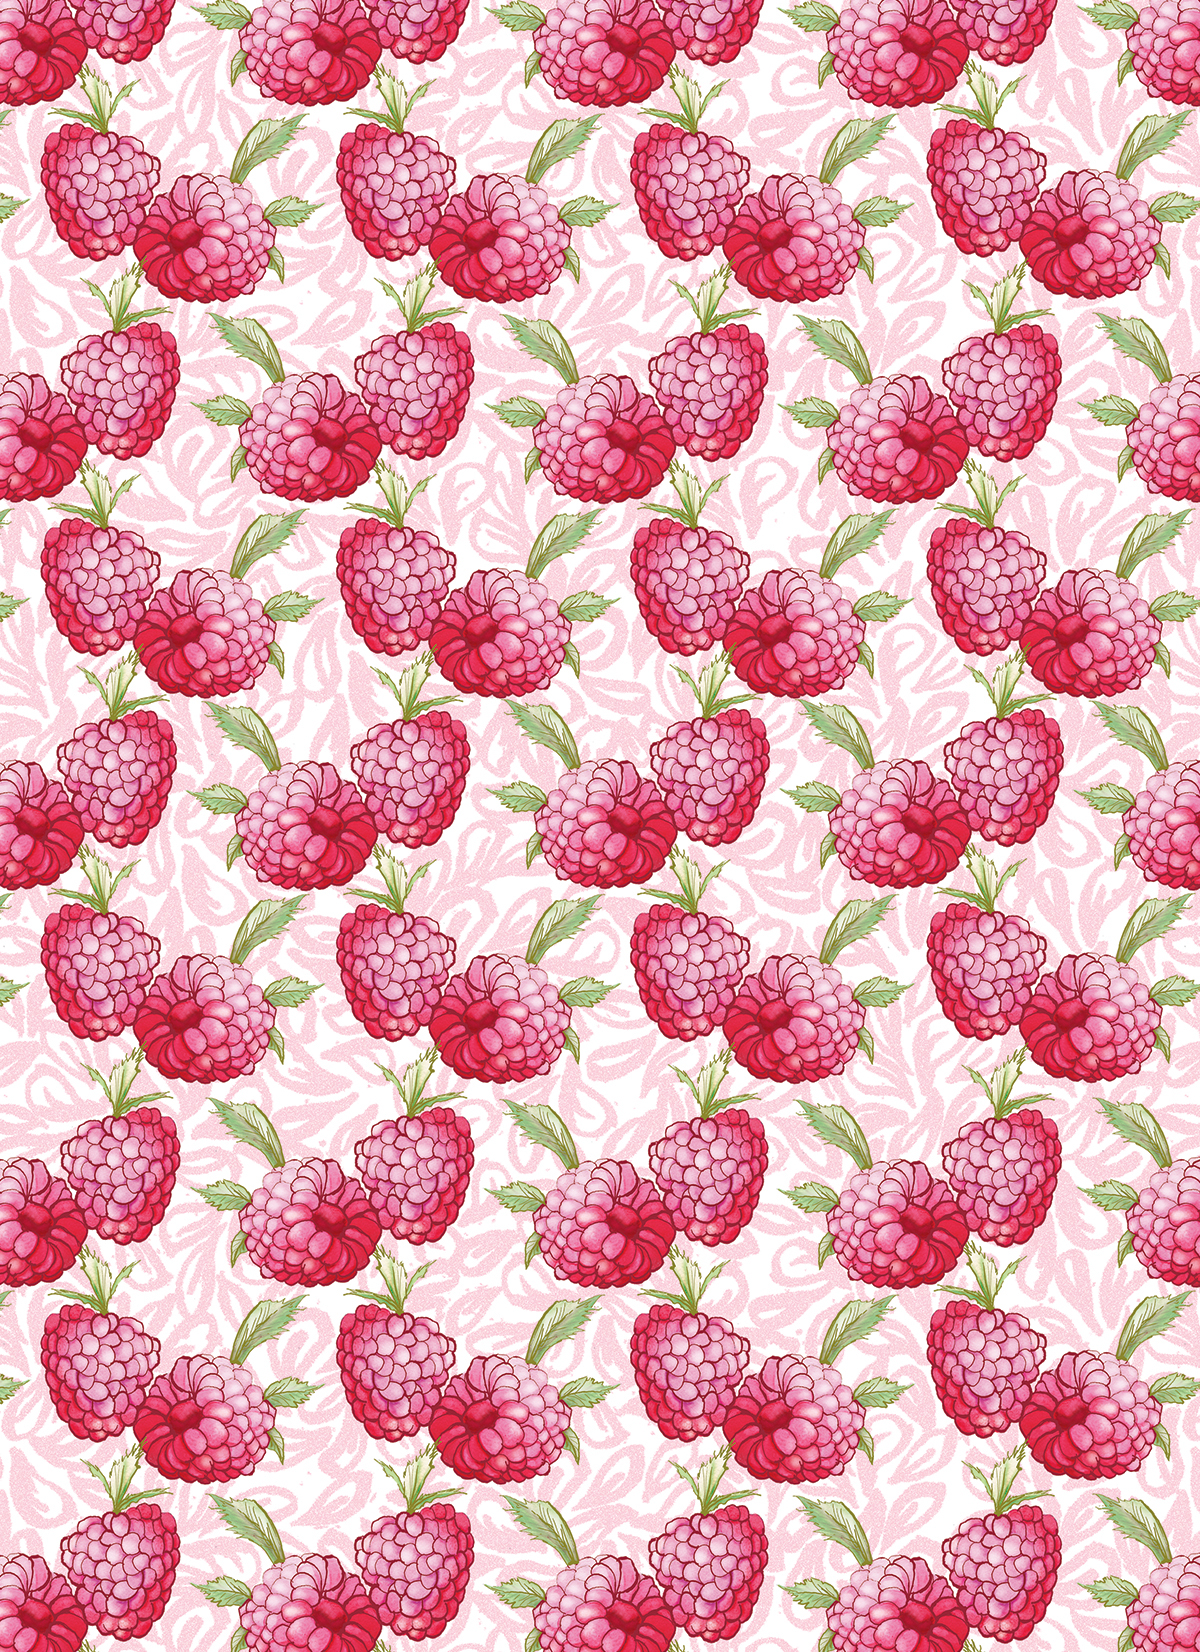 food illustration food pattern lifestyle Healthy Living healthy eating superfoods berries Fruit blueberries blackberries raspberries strawberries Health